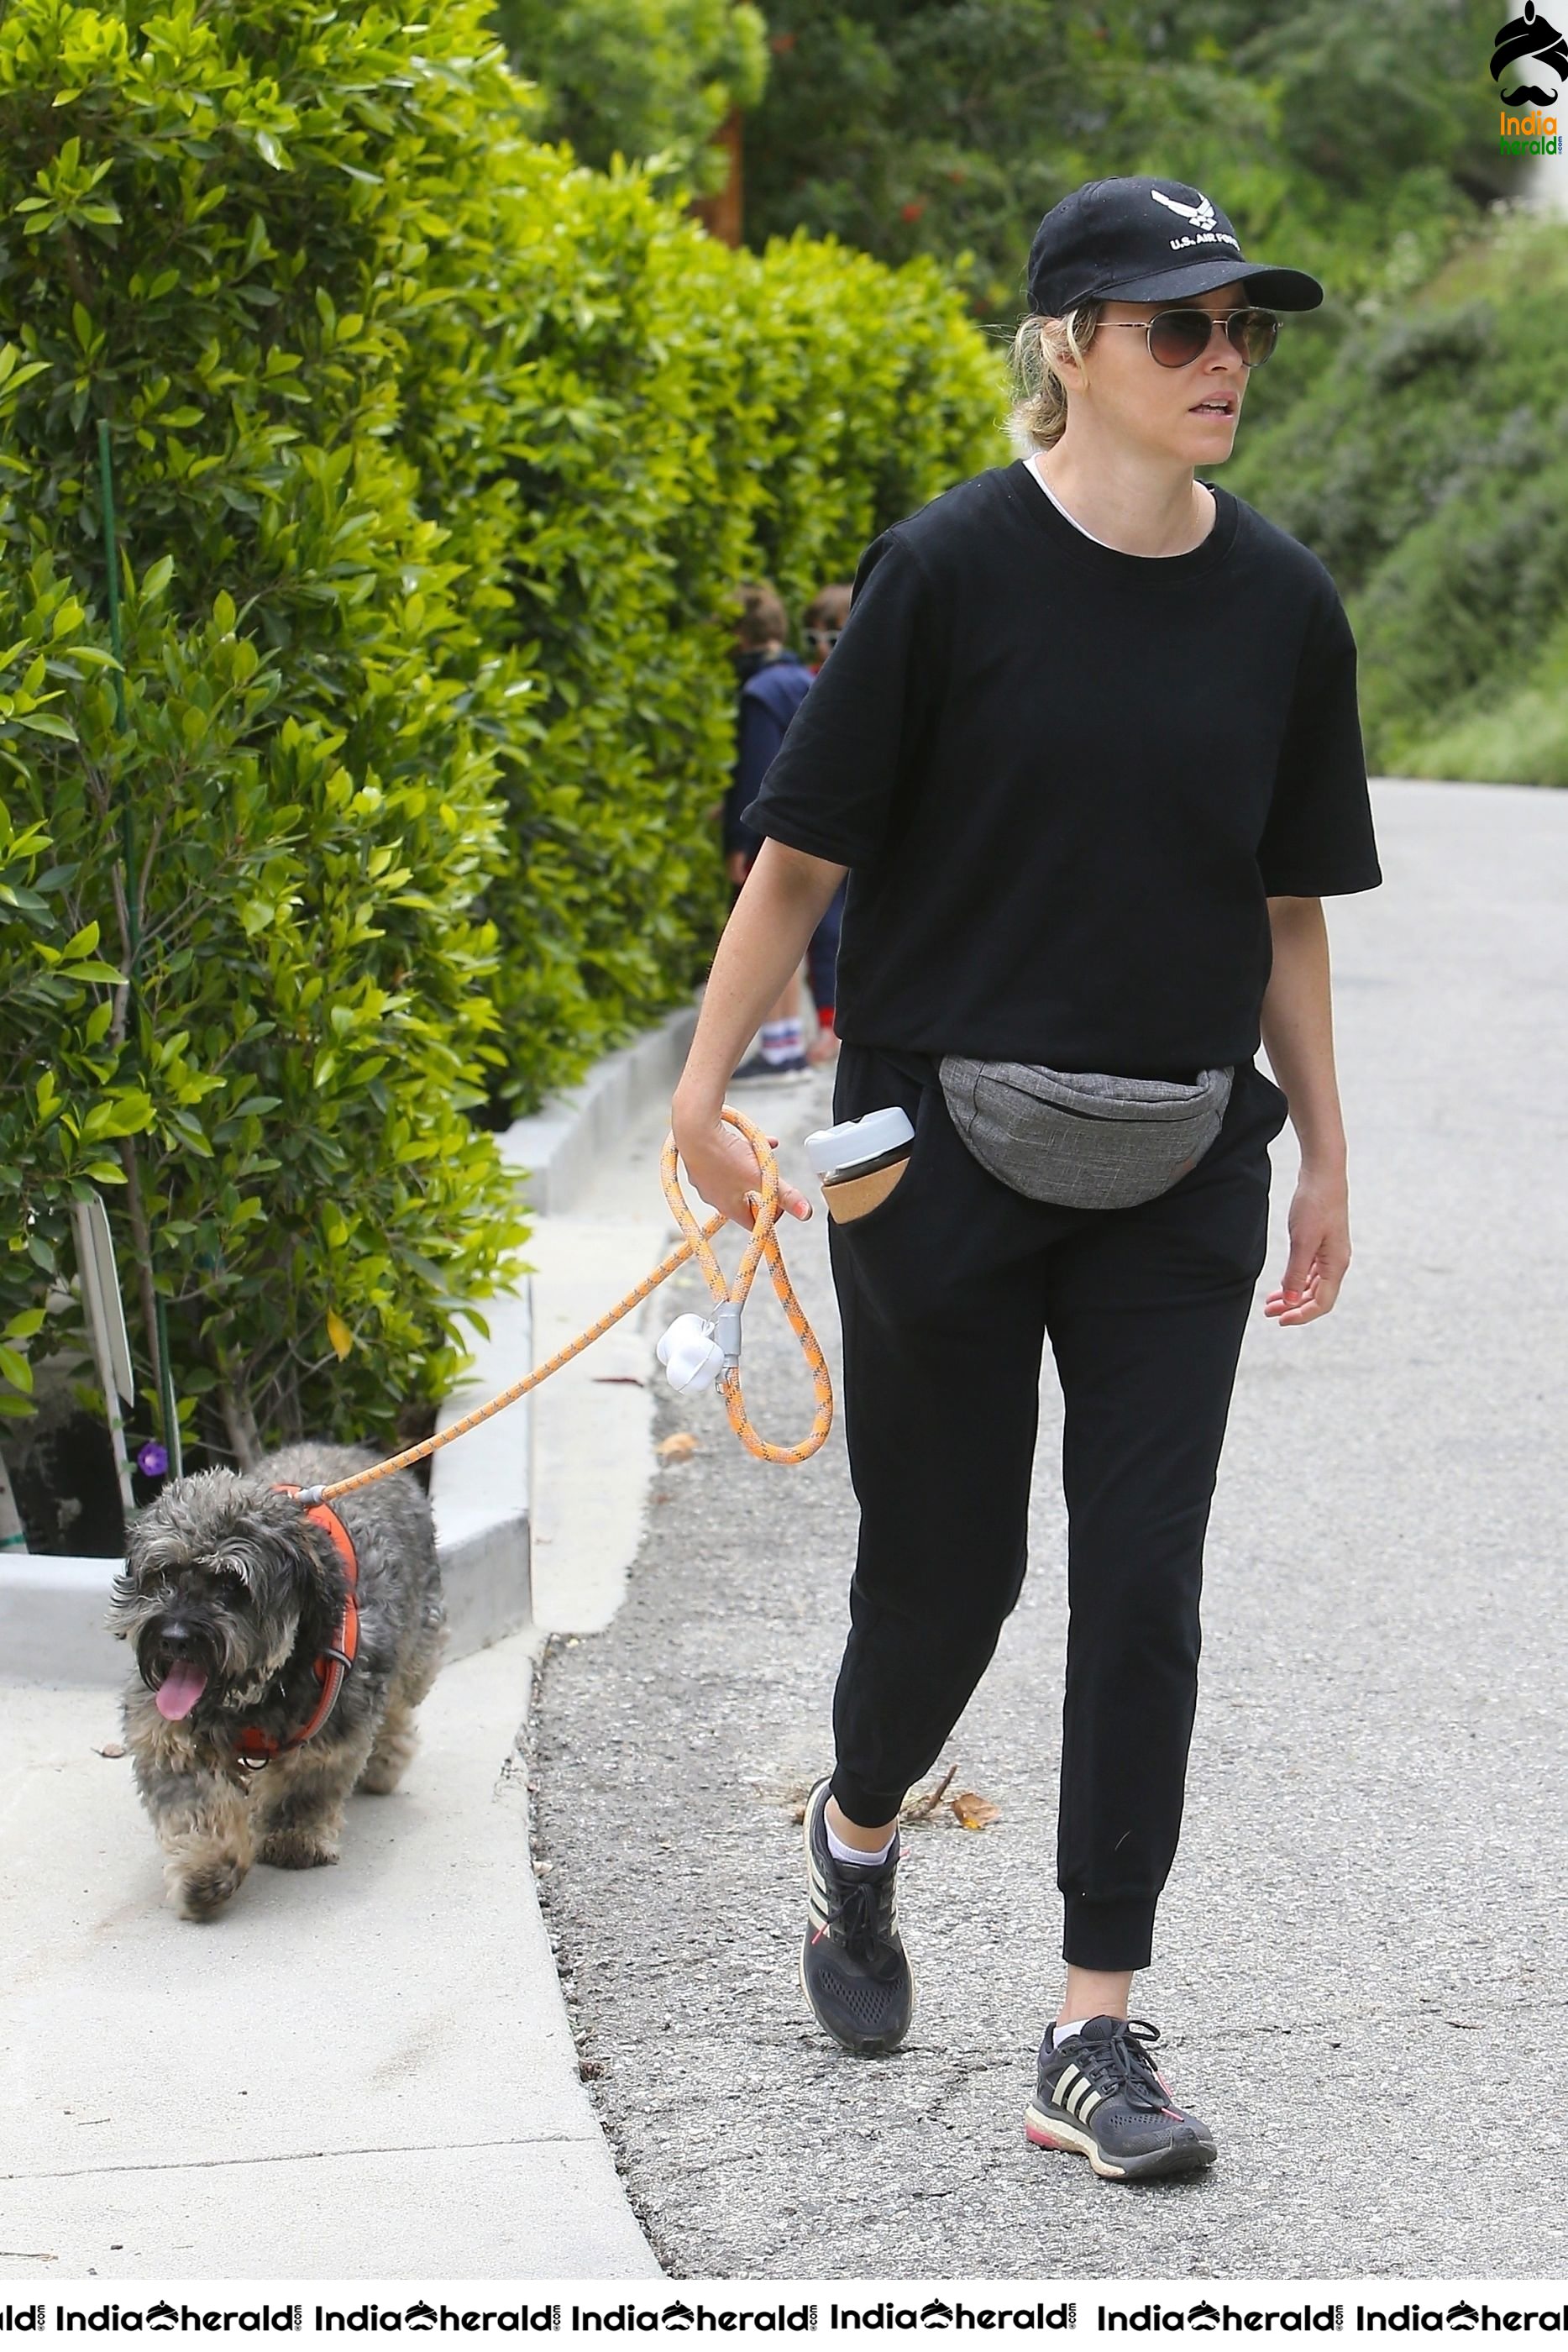 Elizabeth Banks Walks her dog in the Hollywood Hills despite Lockdown due to Corona Virus